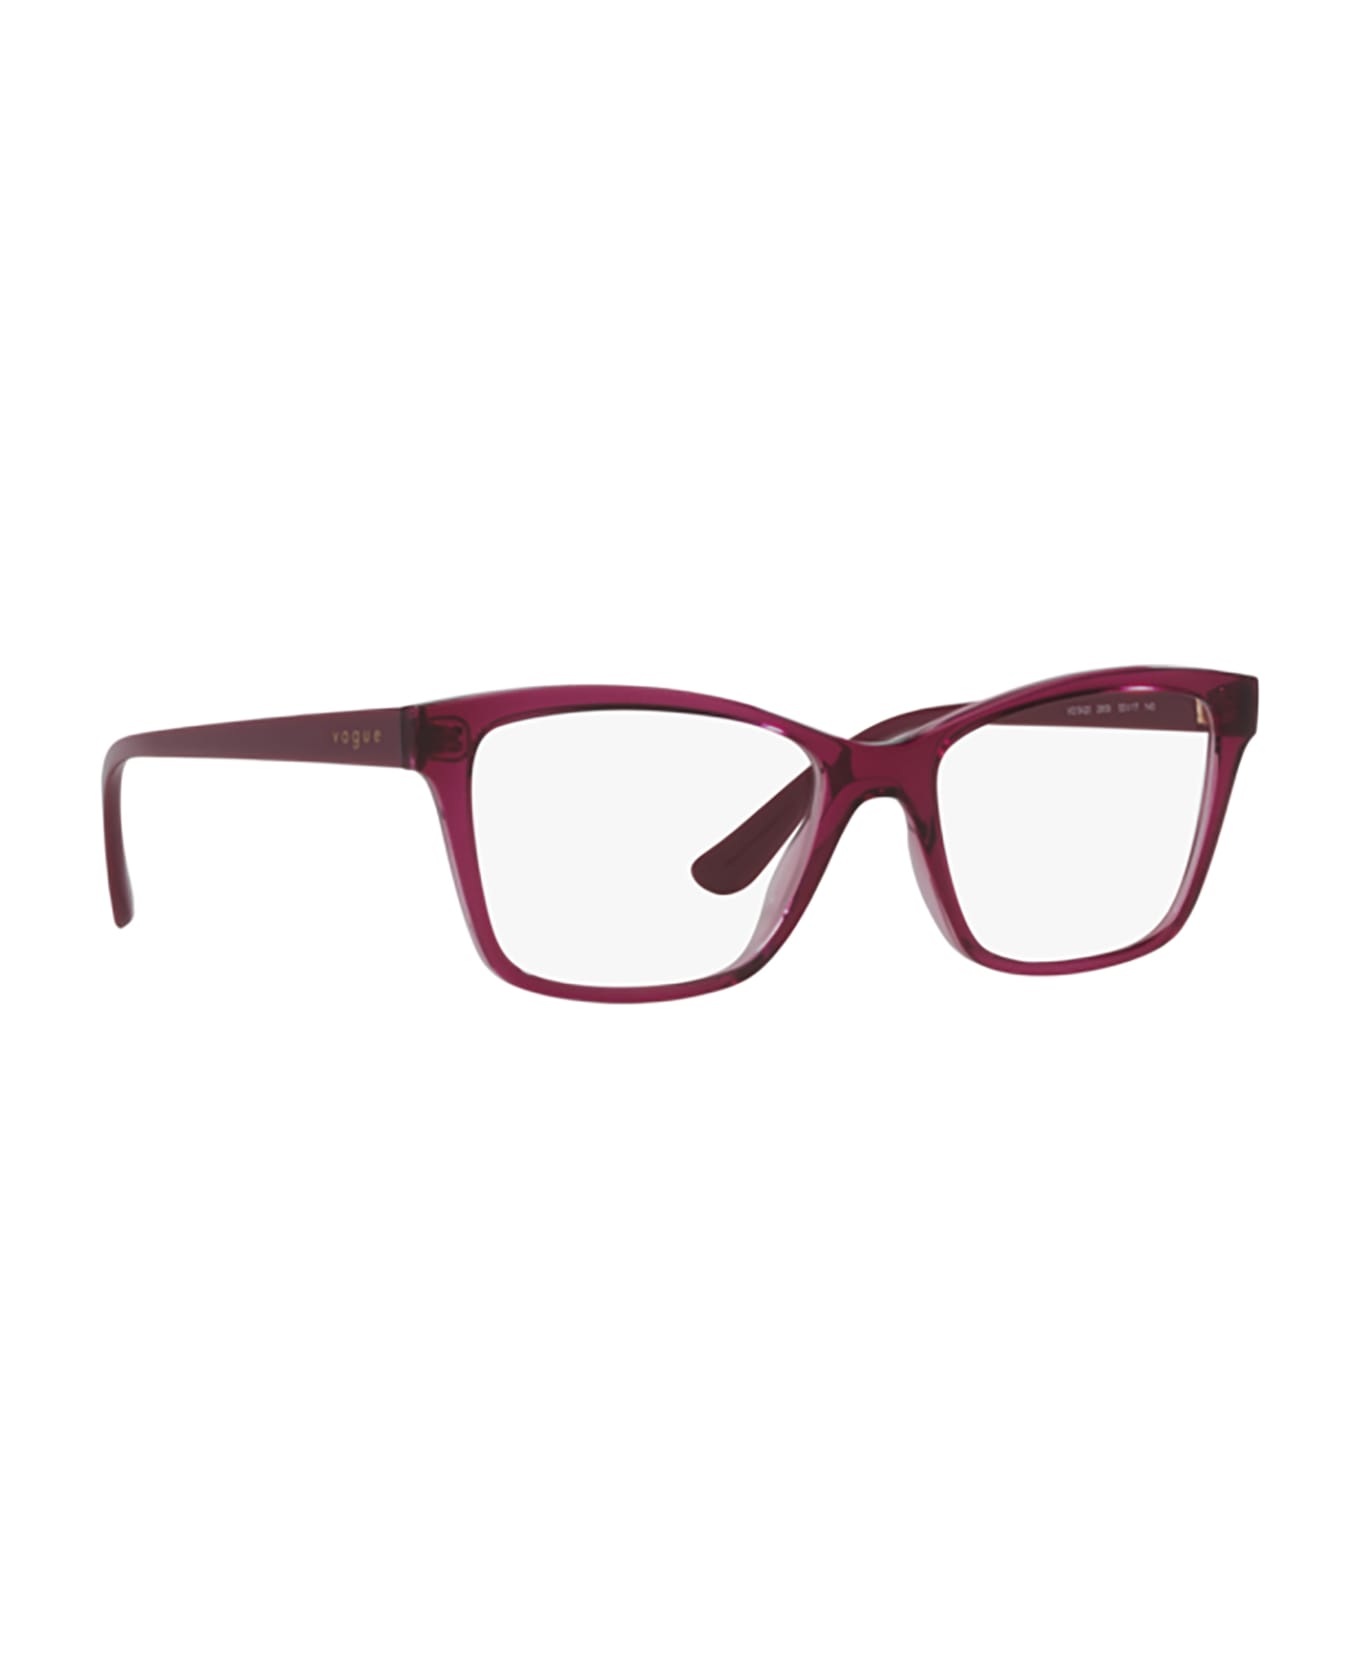 Vogue Eyewear Vo5420 Top Violet/pink Glasses - Top Violet/Pink